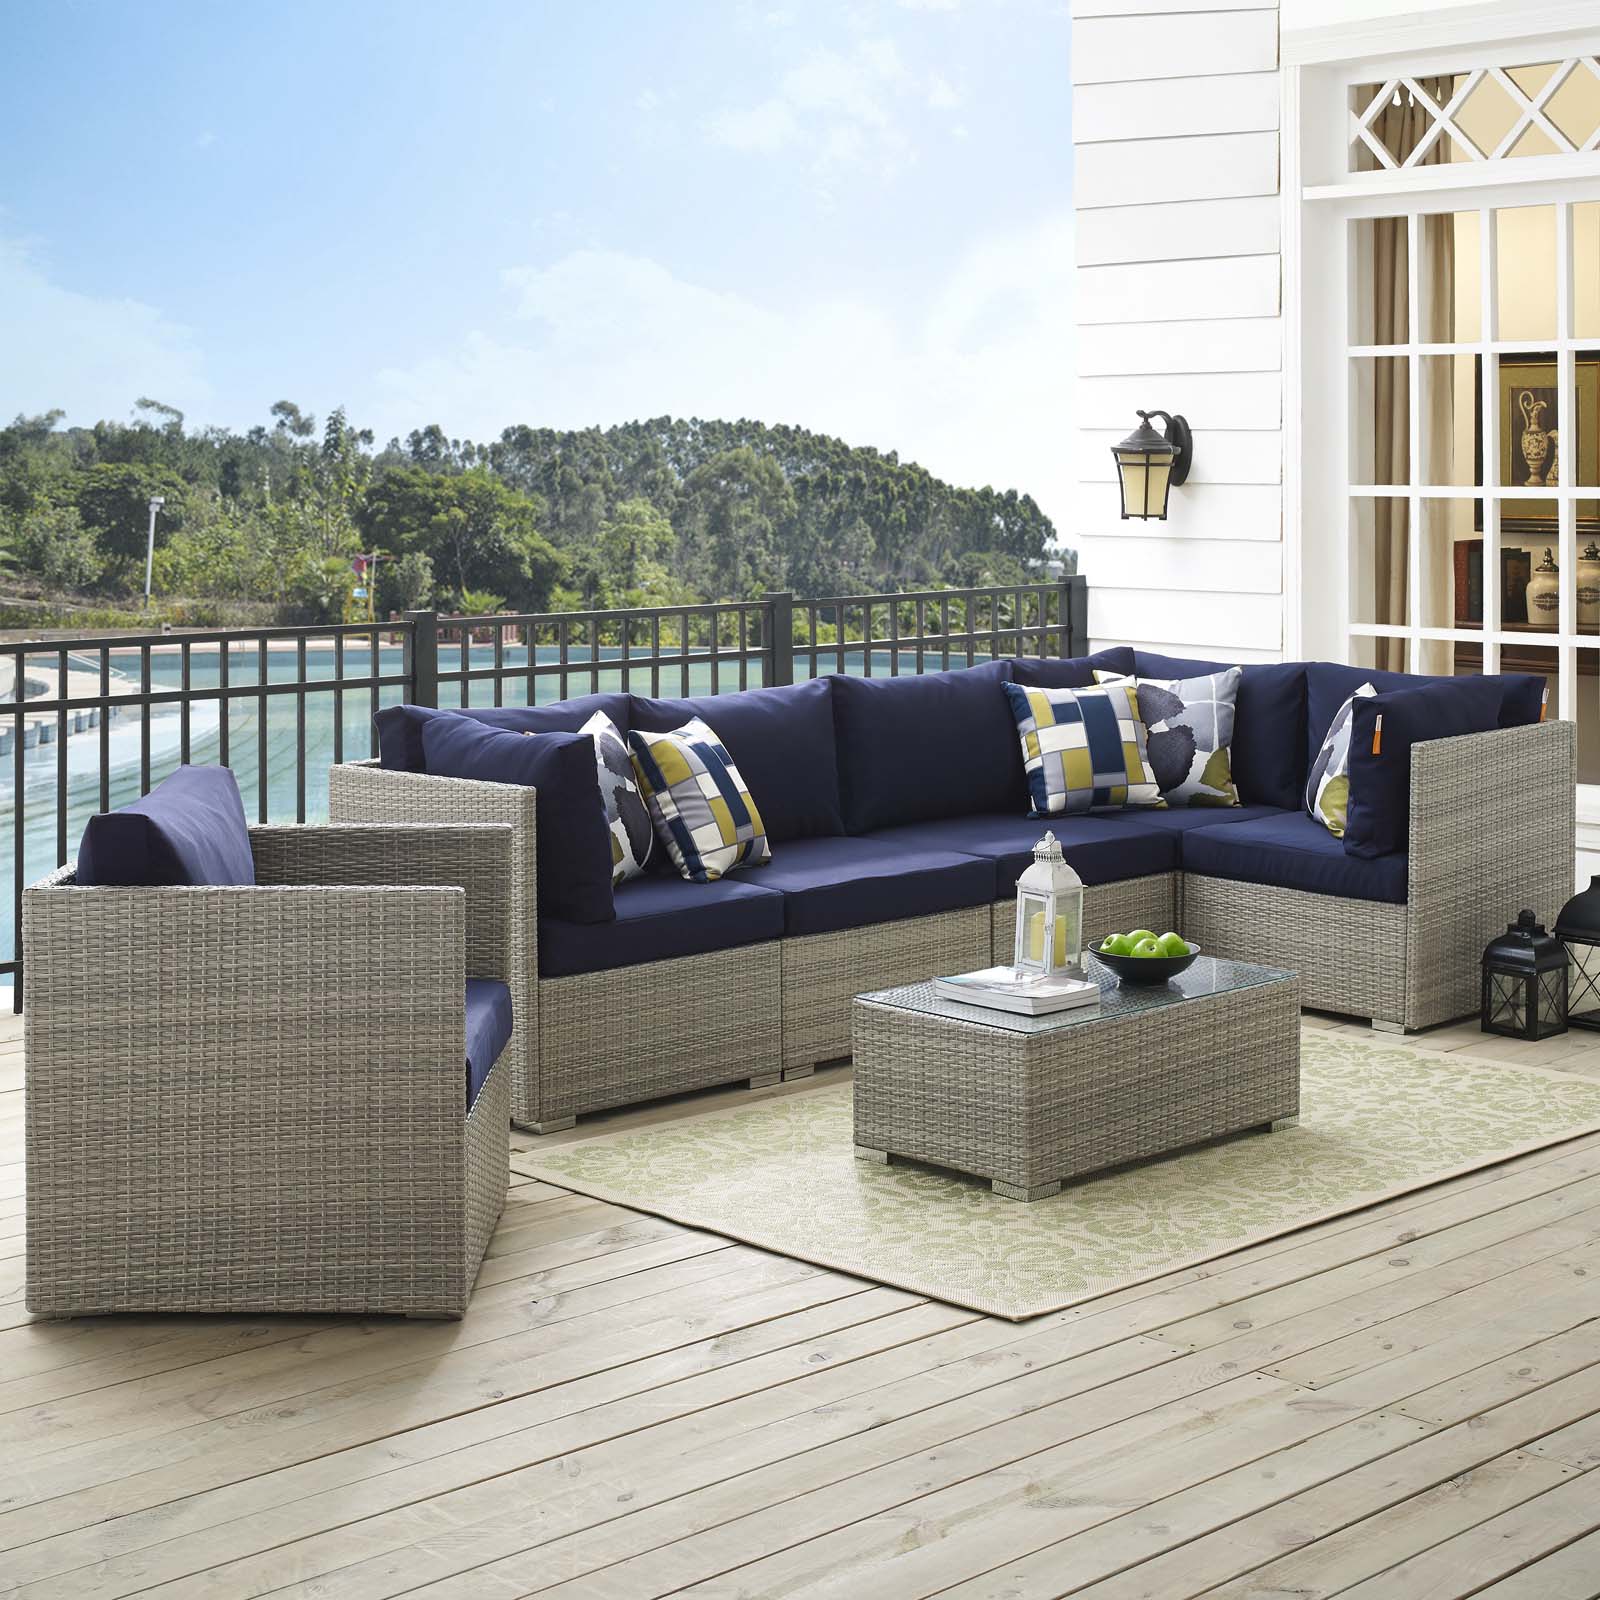 Modern Contemporary Outdoor Patio Balcony Garden Furniture Lounge Sectional Sofa and Table Set, Sunbrella Rattan Wicker, Navy Blue Light Gray - image 2 of 9